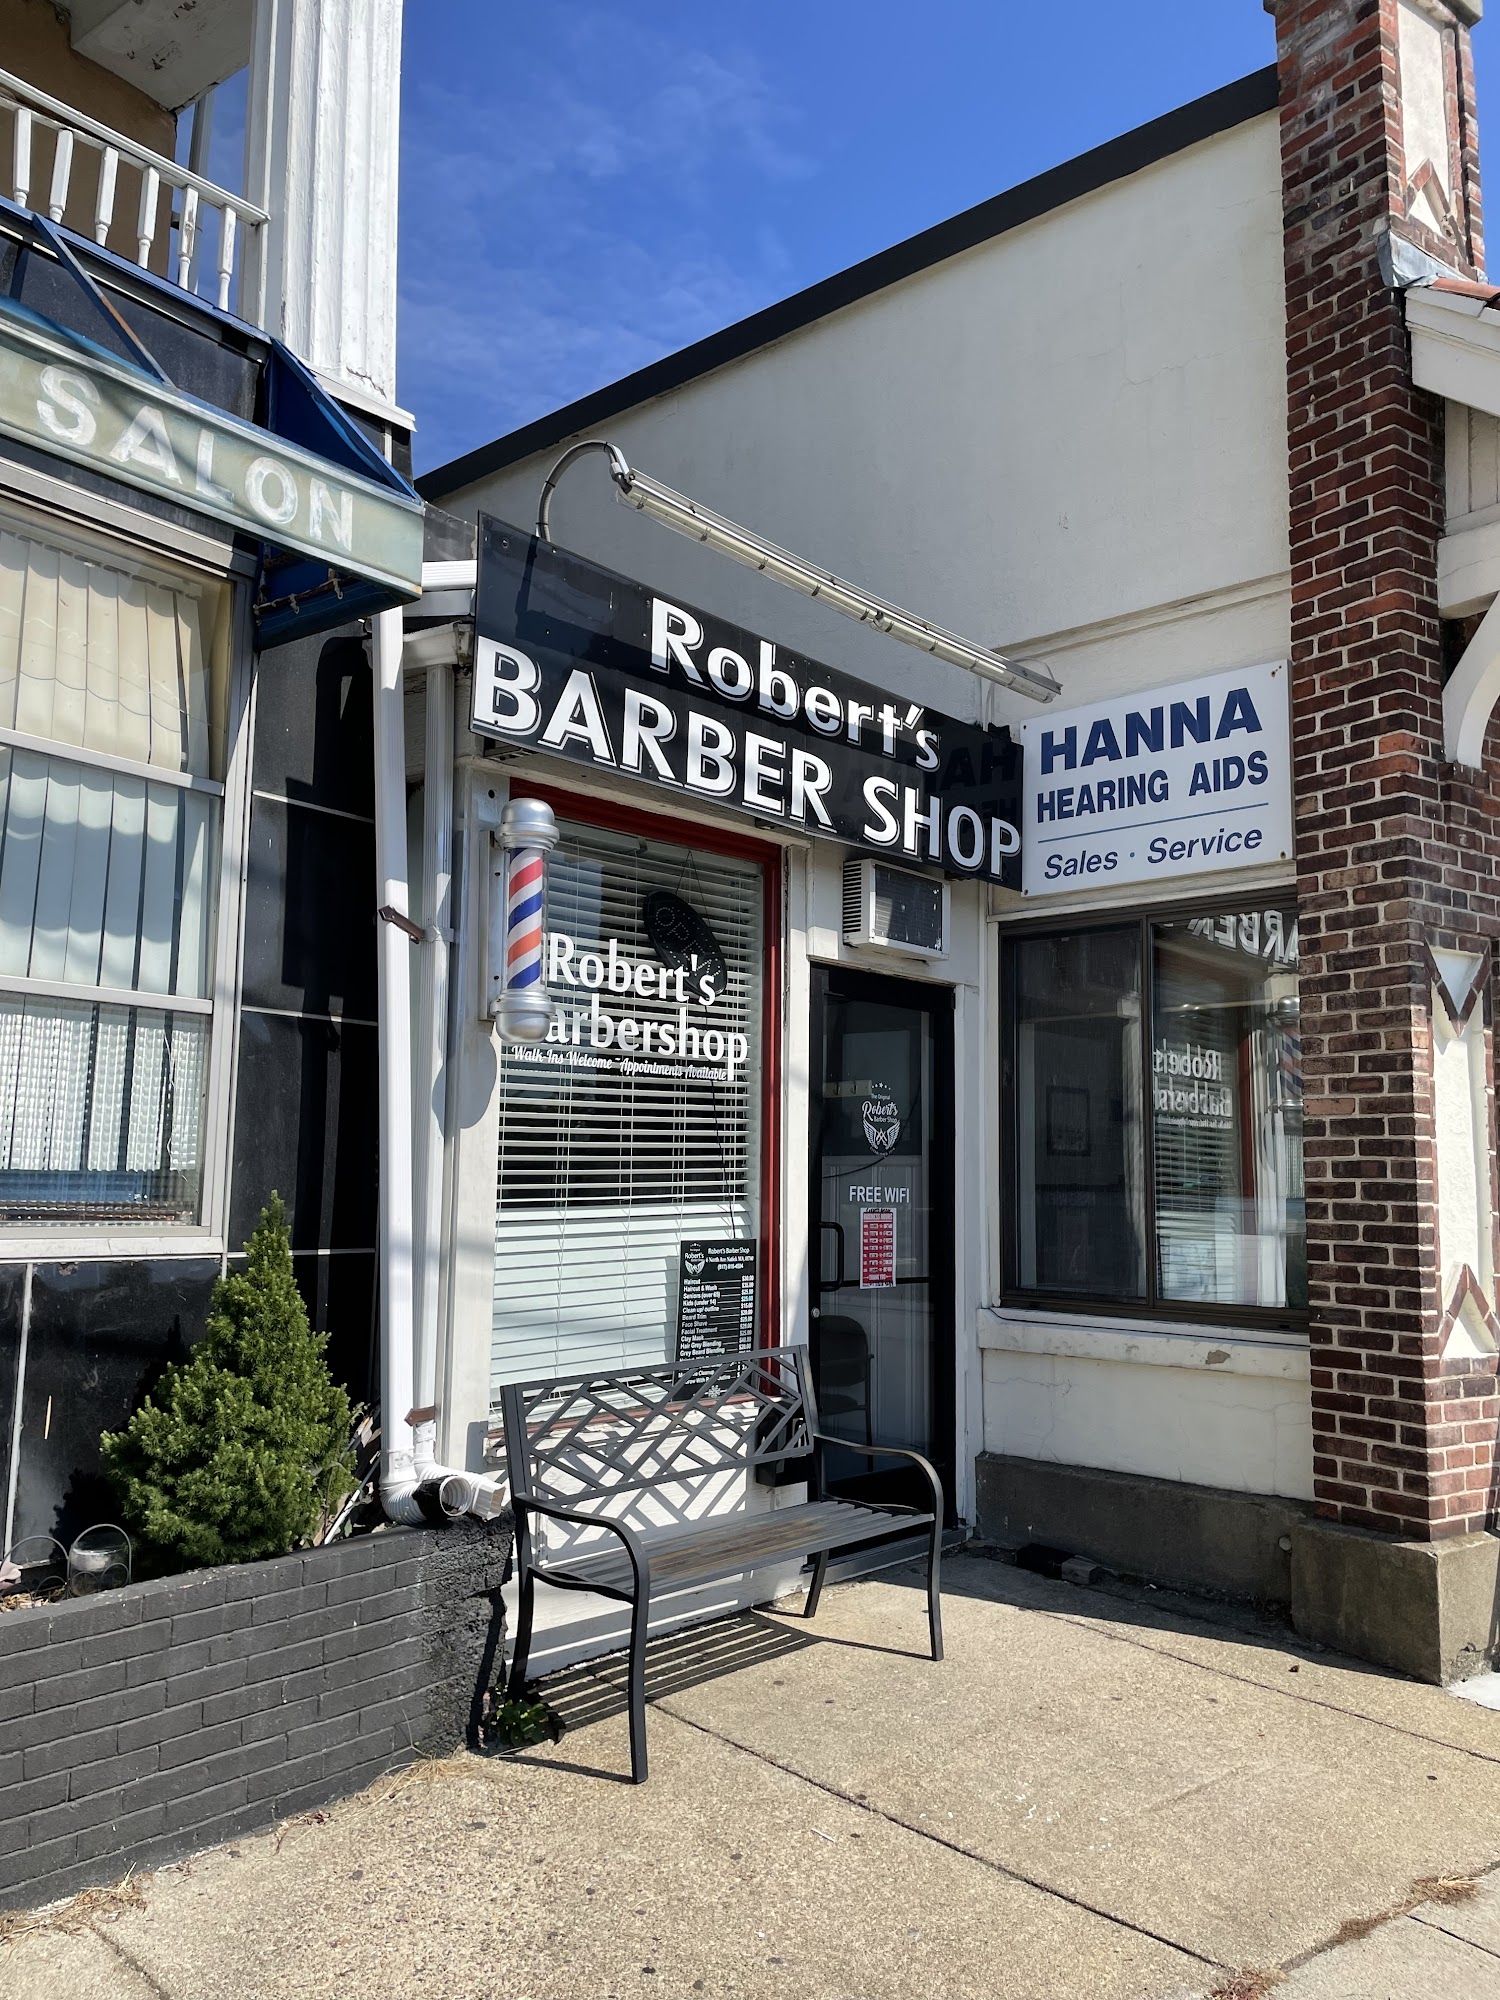 Robert's Barber shop